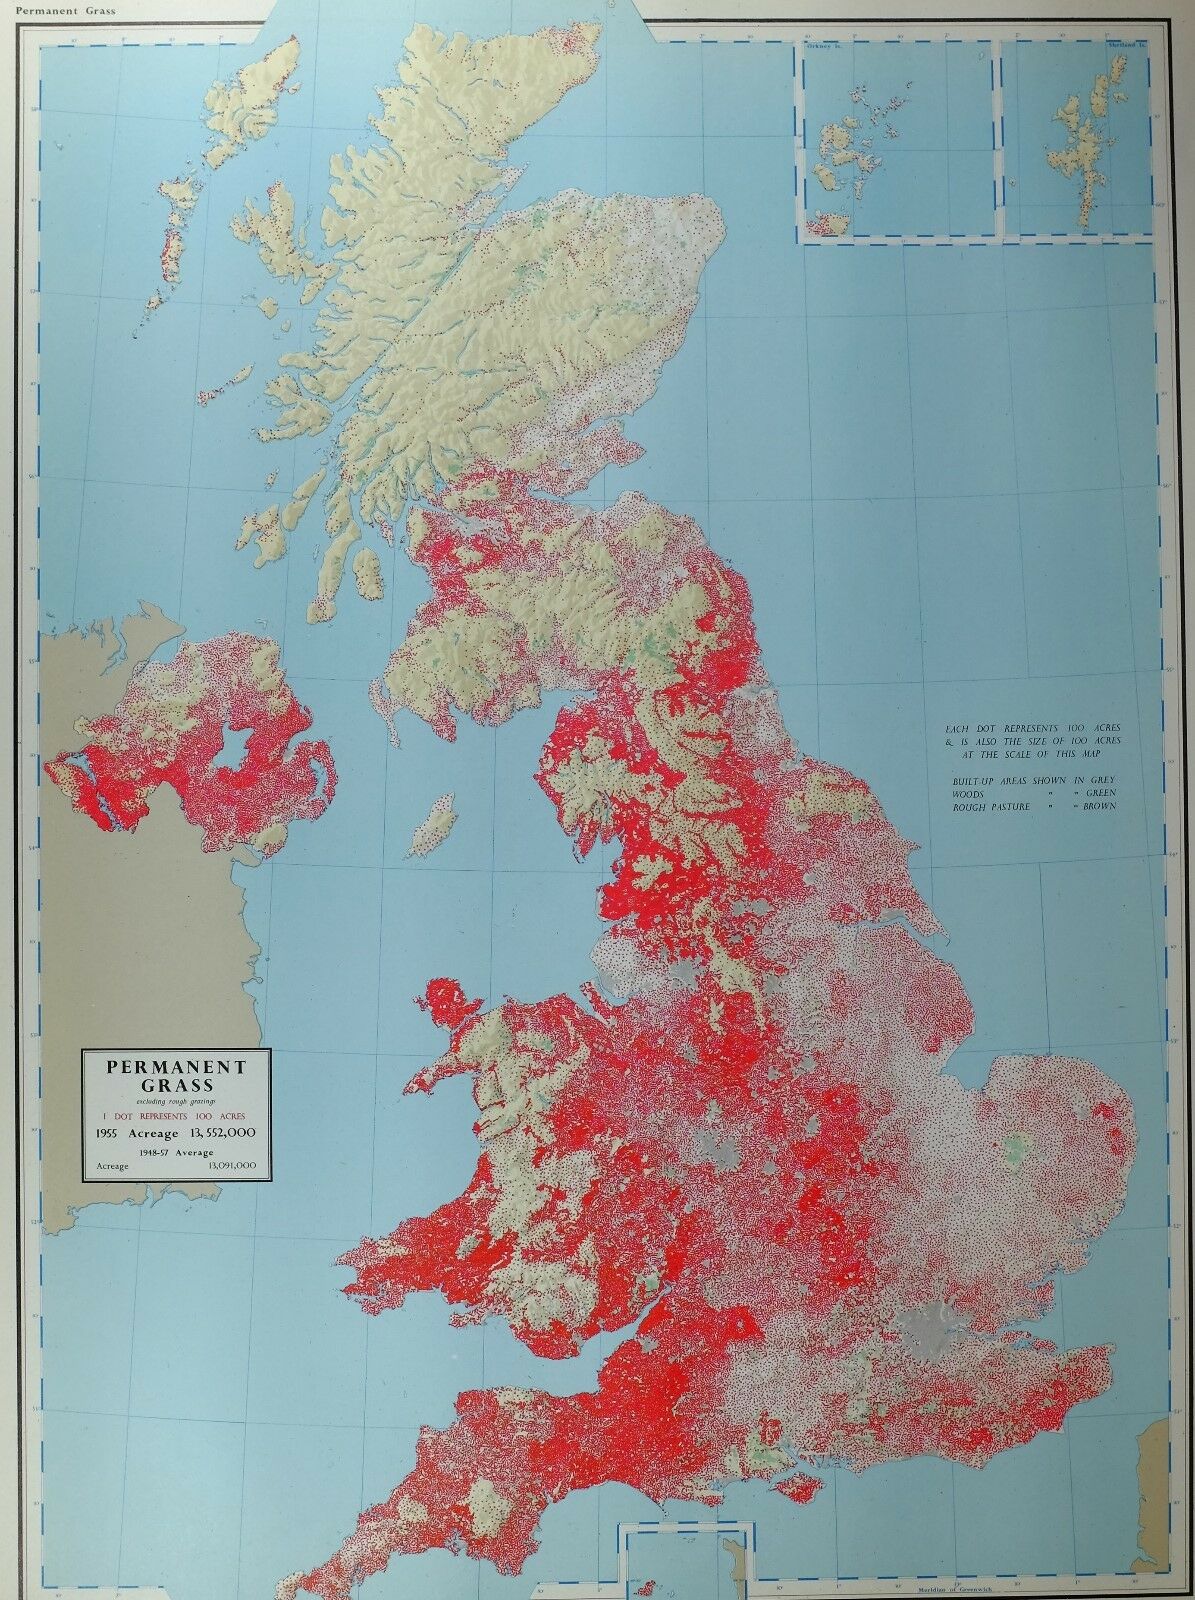 VINTAGE LARGE MAP of BRITAIN PERMANENT GRASS 1955 ACREAGE